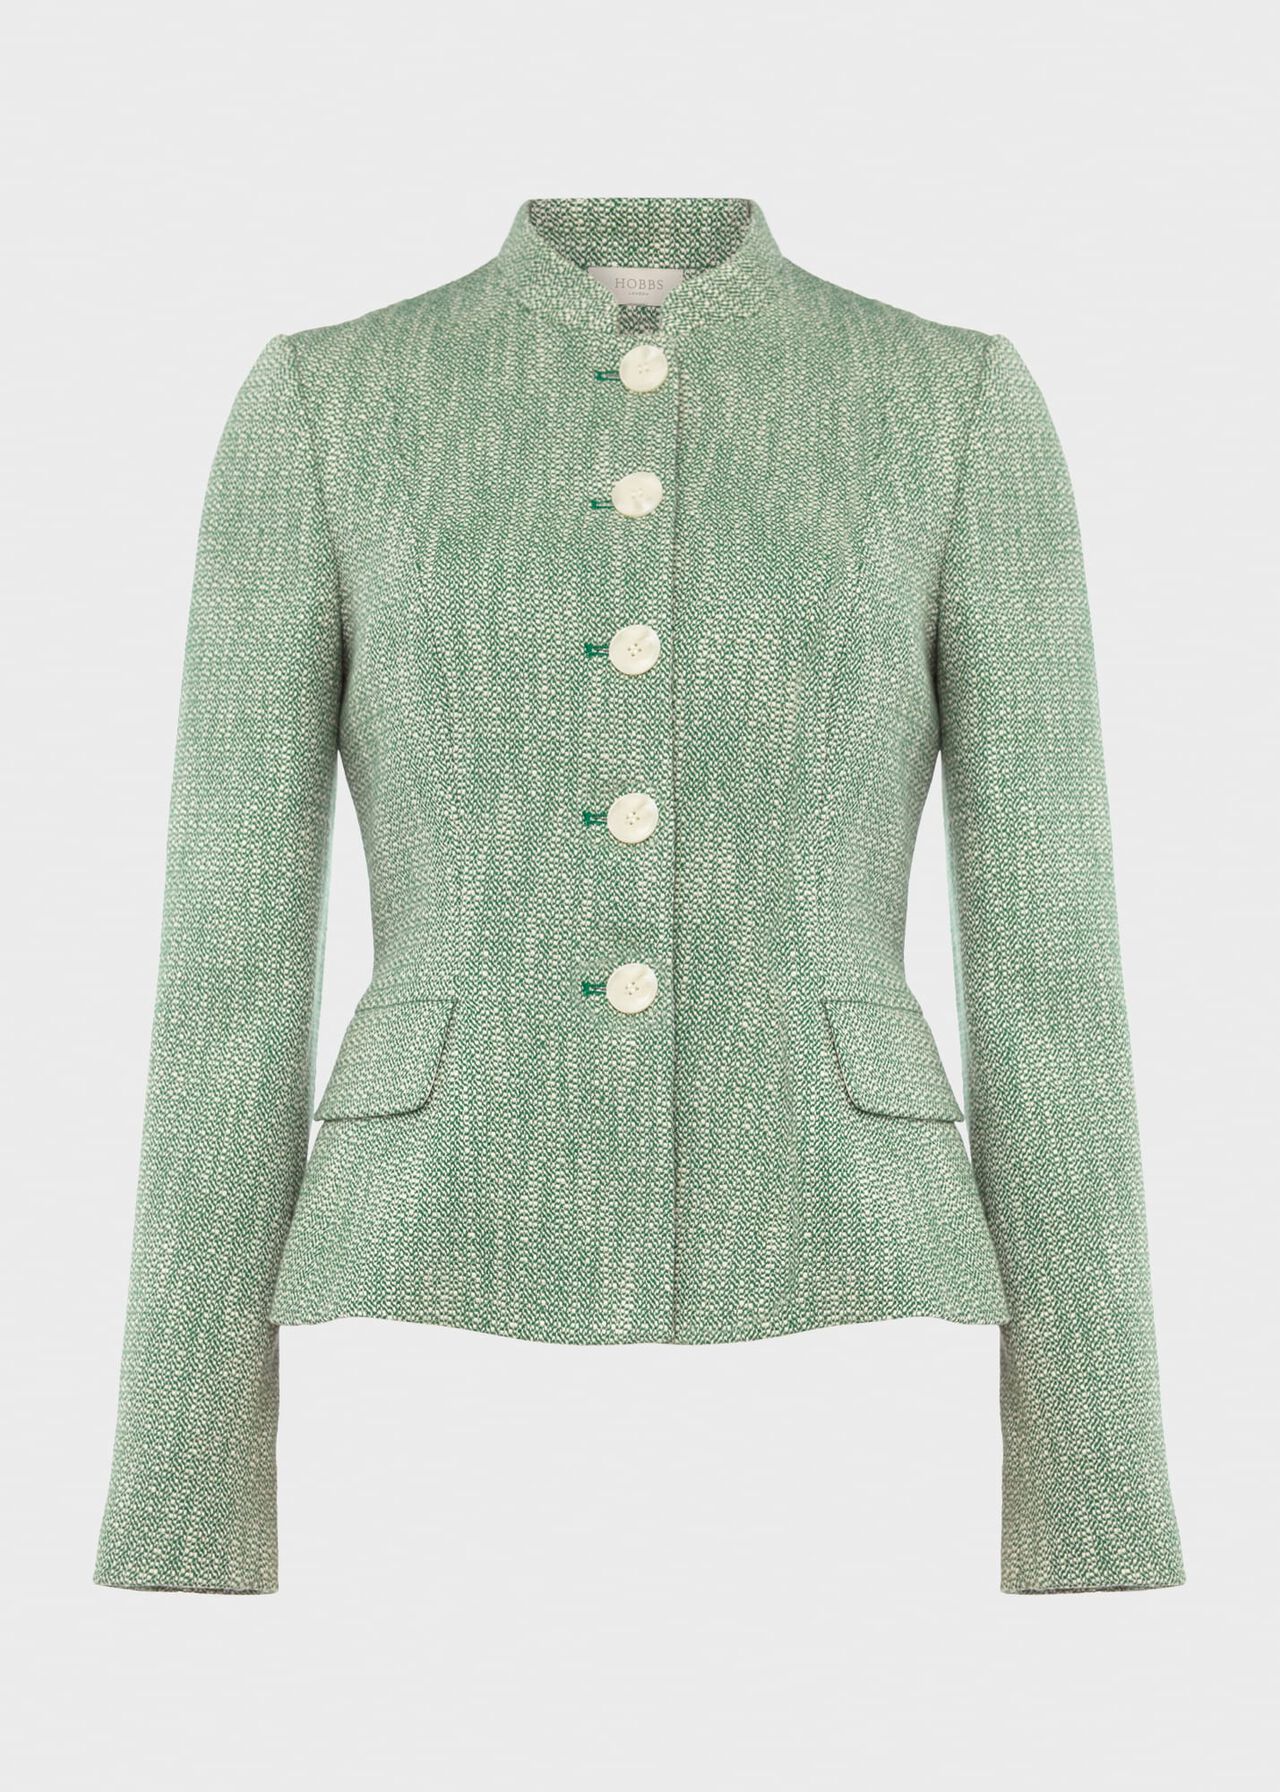 Farren Tweed Jacket, Green, hi-res